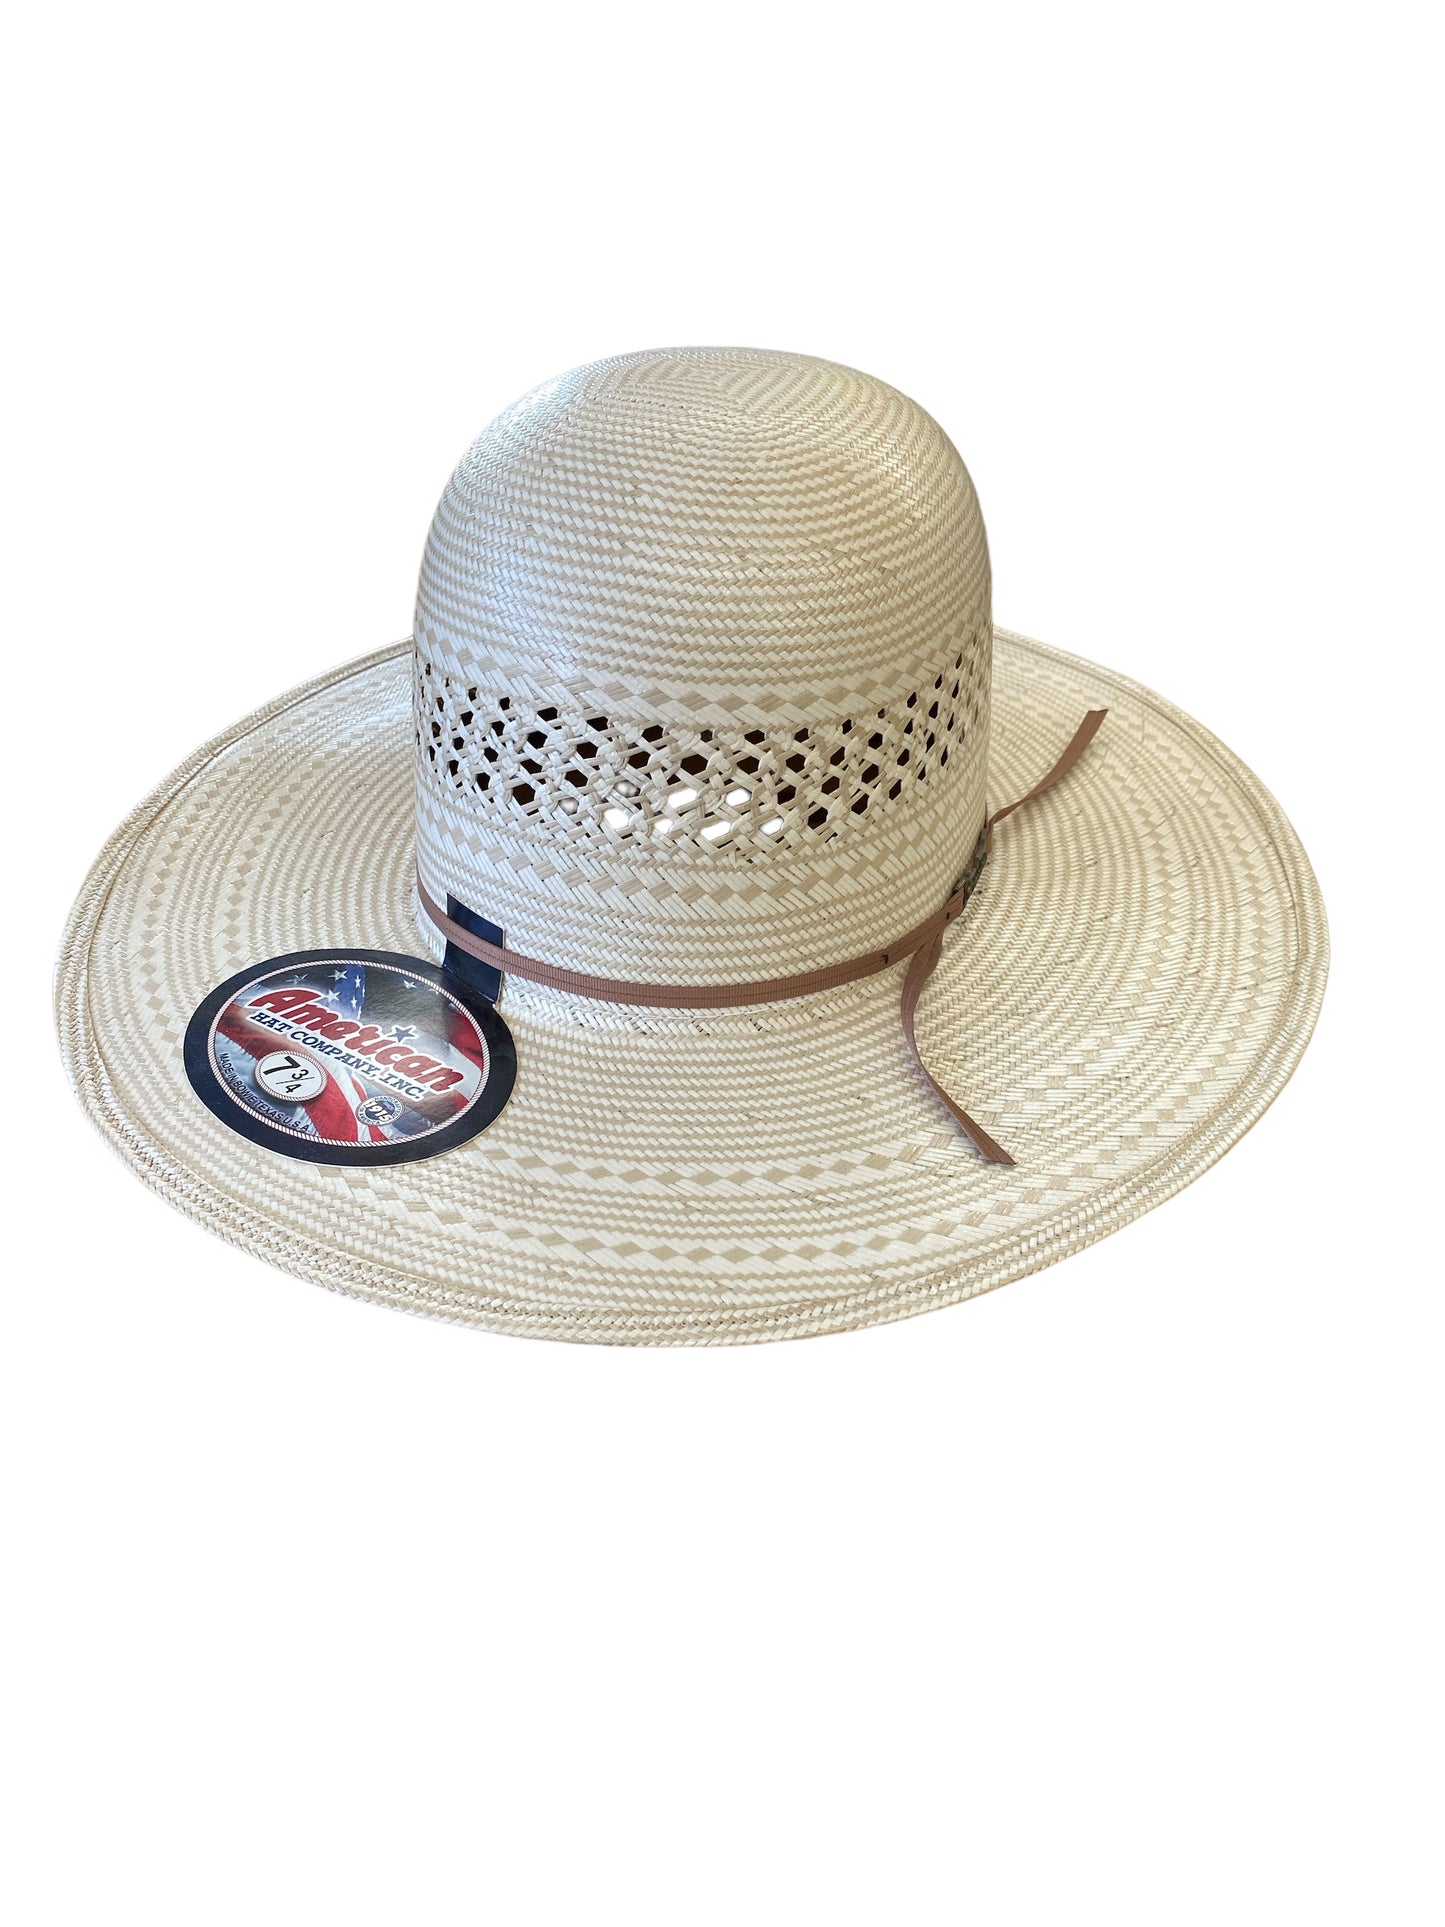 AMERICAN HAT STRAW #77002